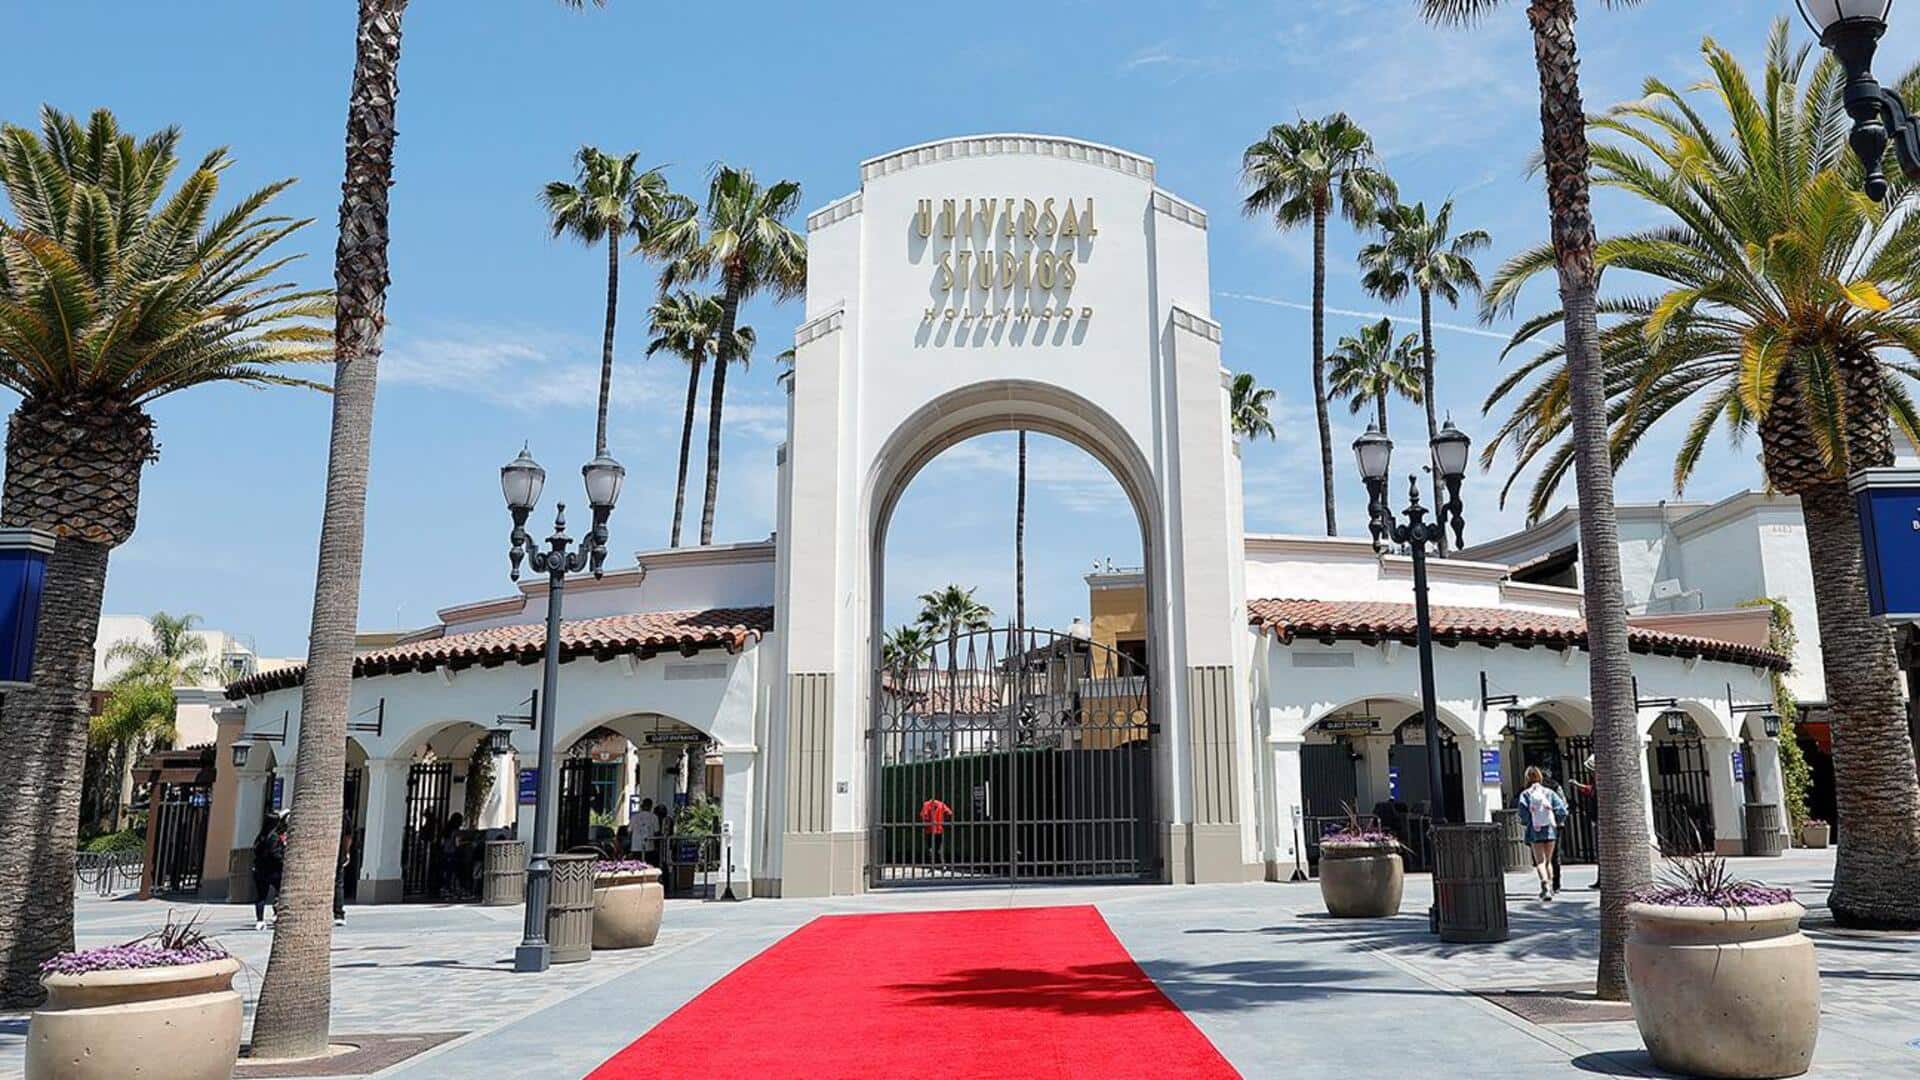 Tram crash at Universal Studios Hollywood leaves 15 injured: Report